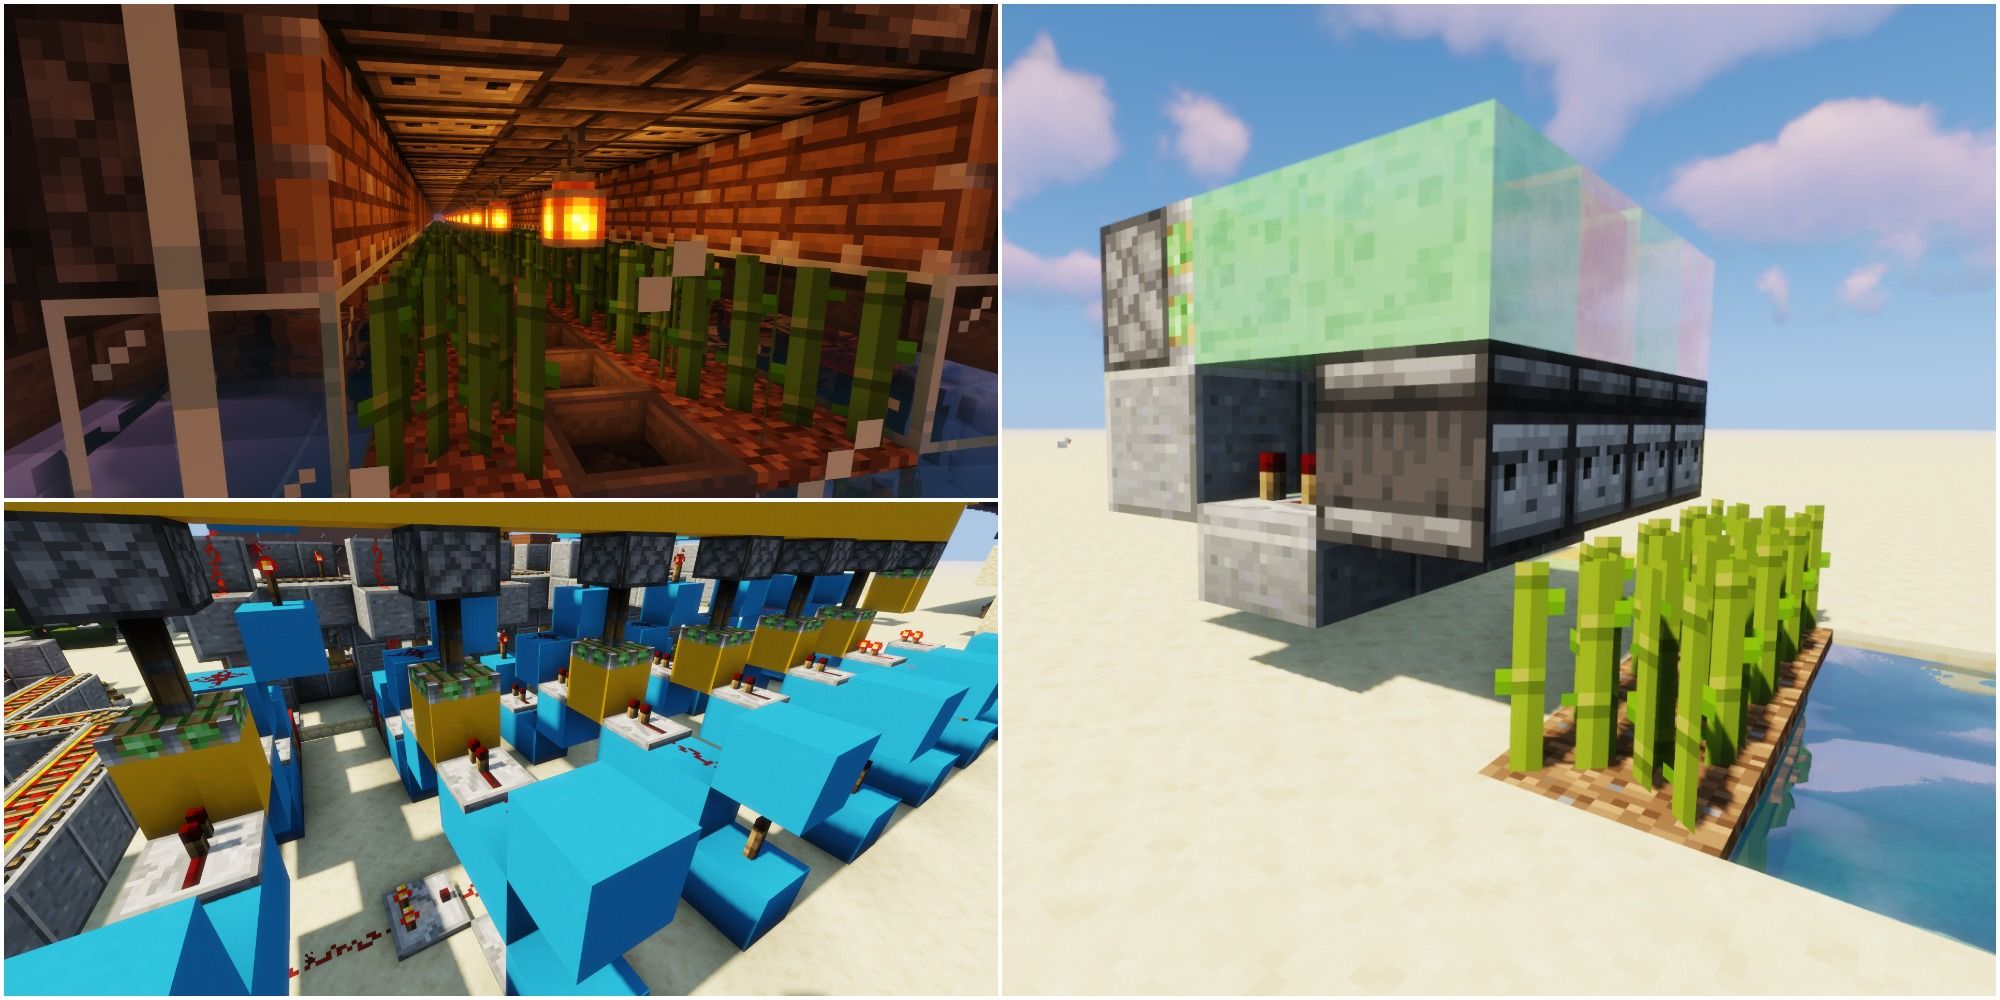 Minecraft: 10 Simple Redstone Builds! 